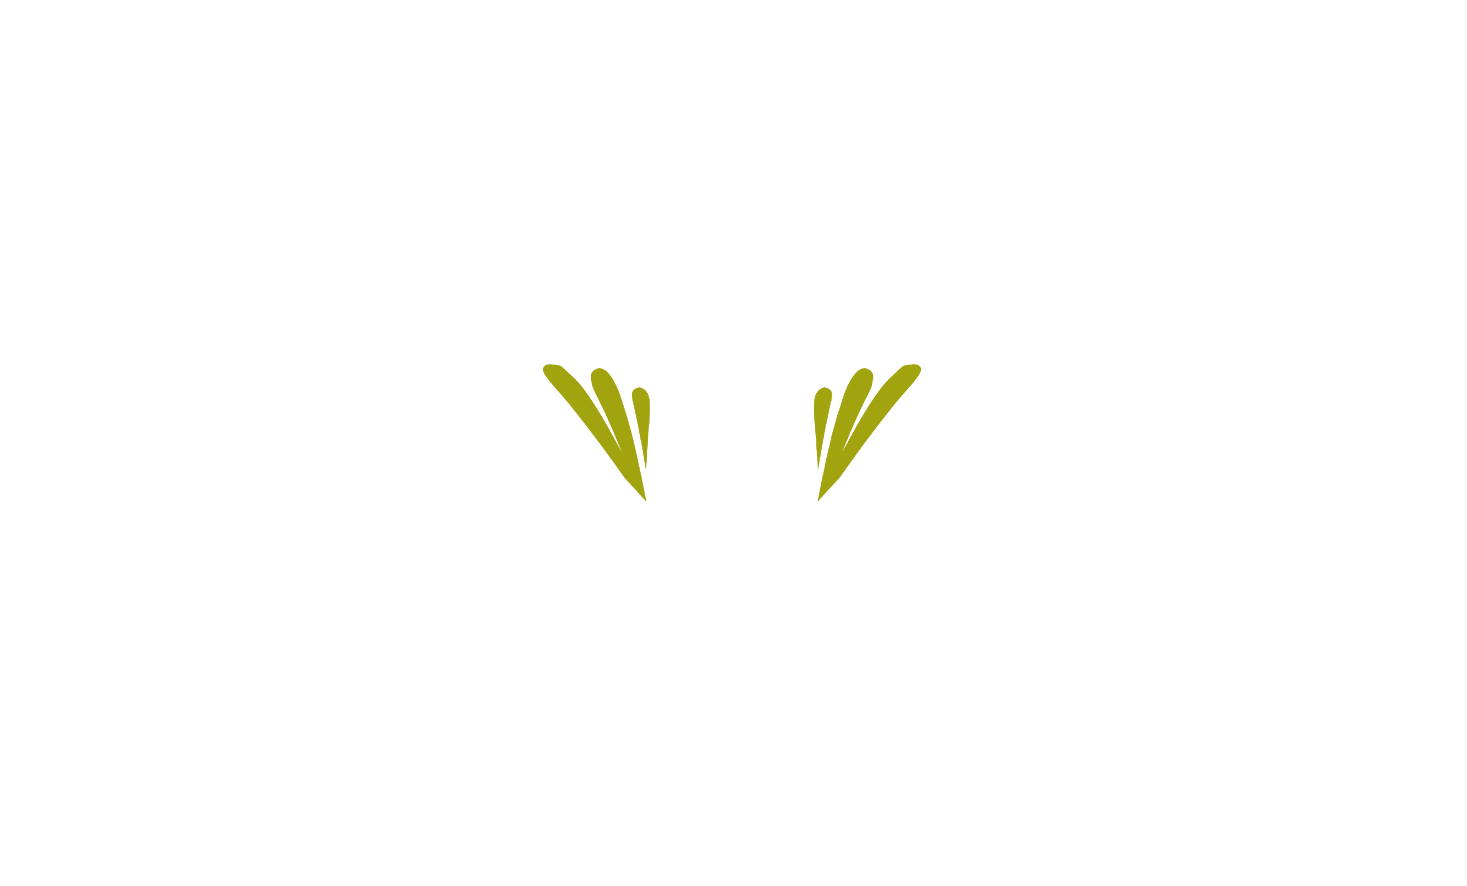 The logo for inclusion alliances coalition.